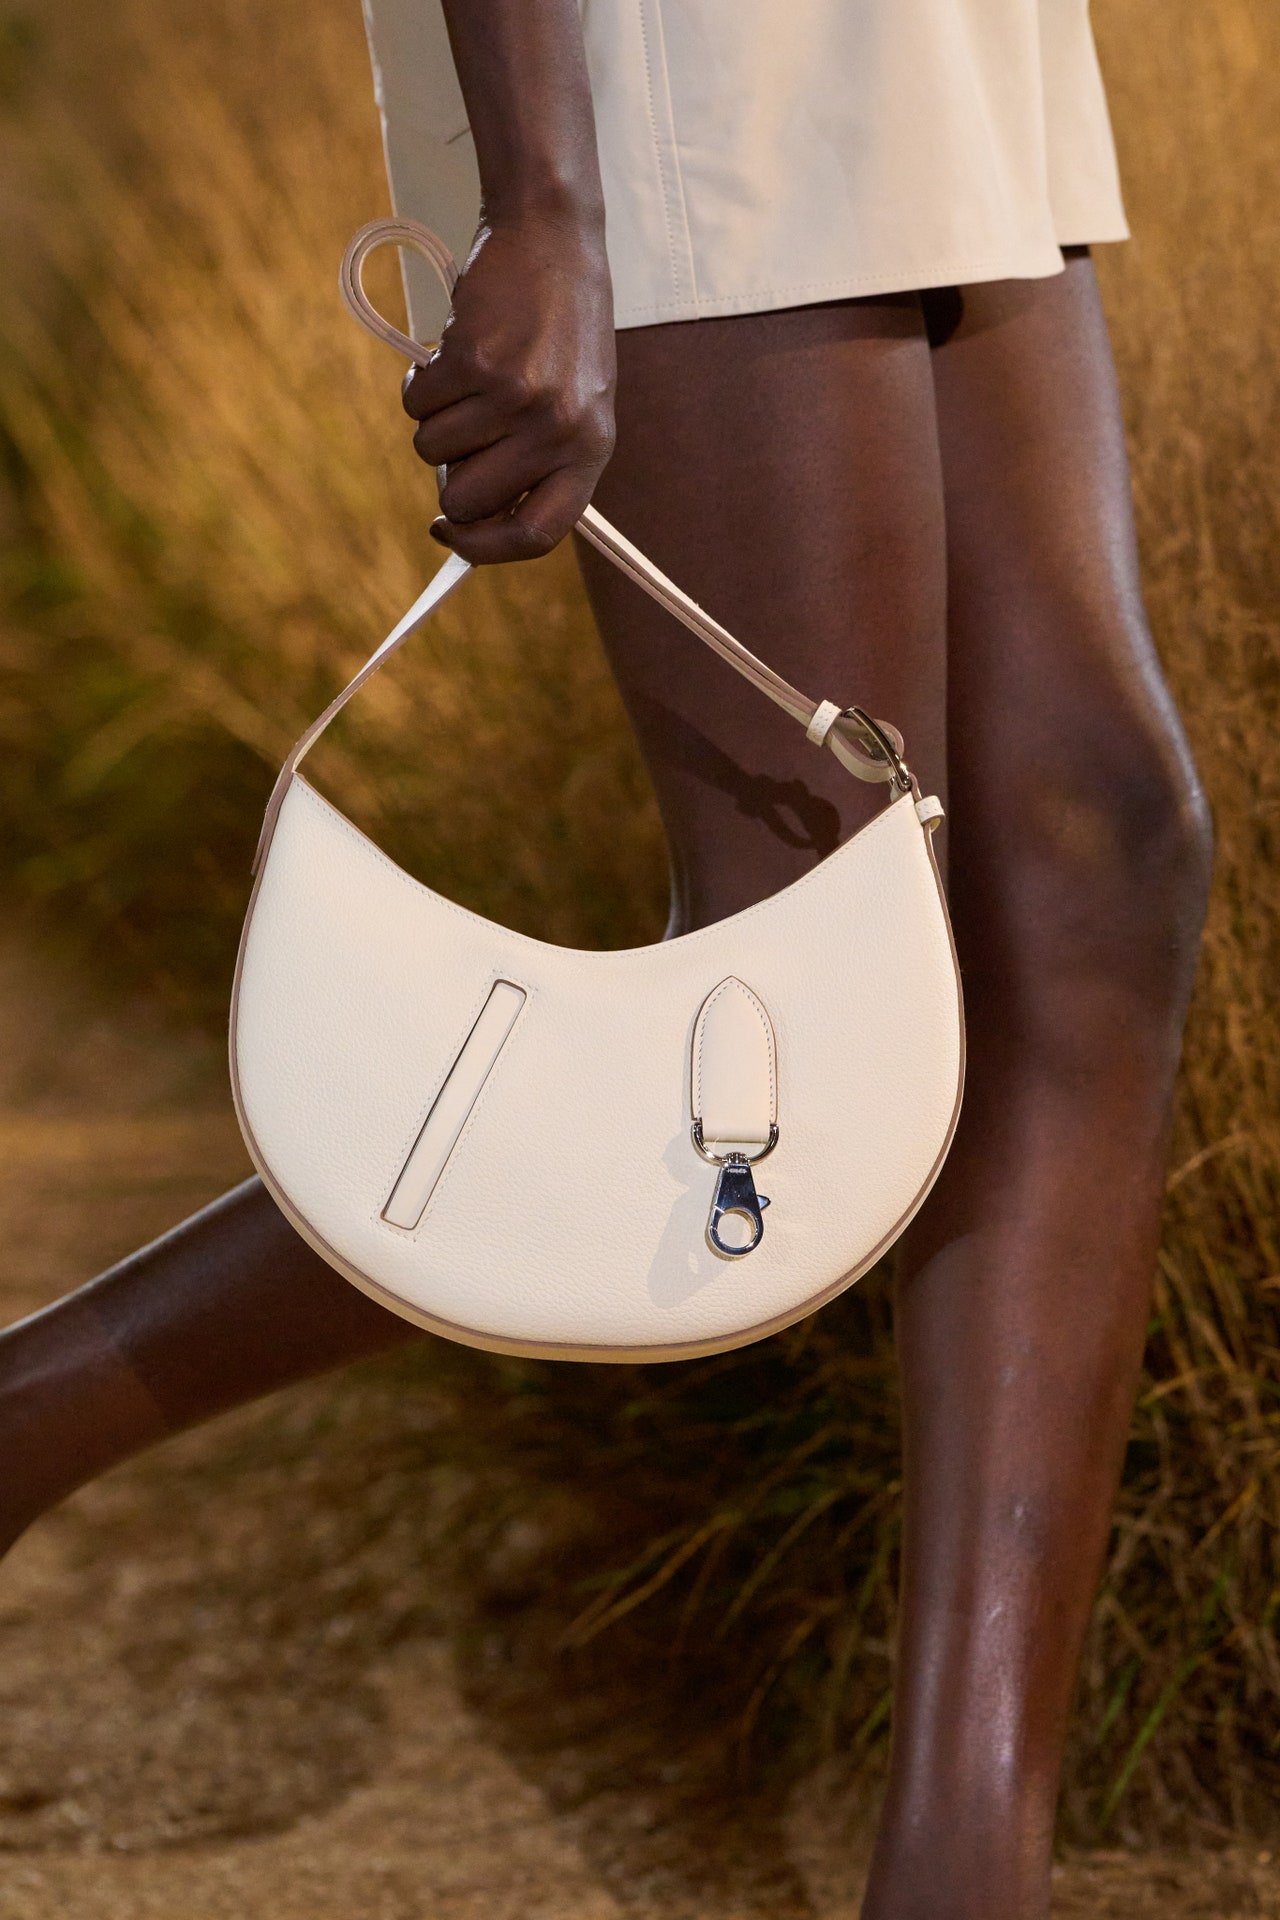 Hermès Introduces 6 New Handbags for Fall/Winter 2022 - PurseBop